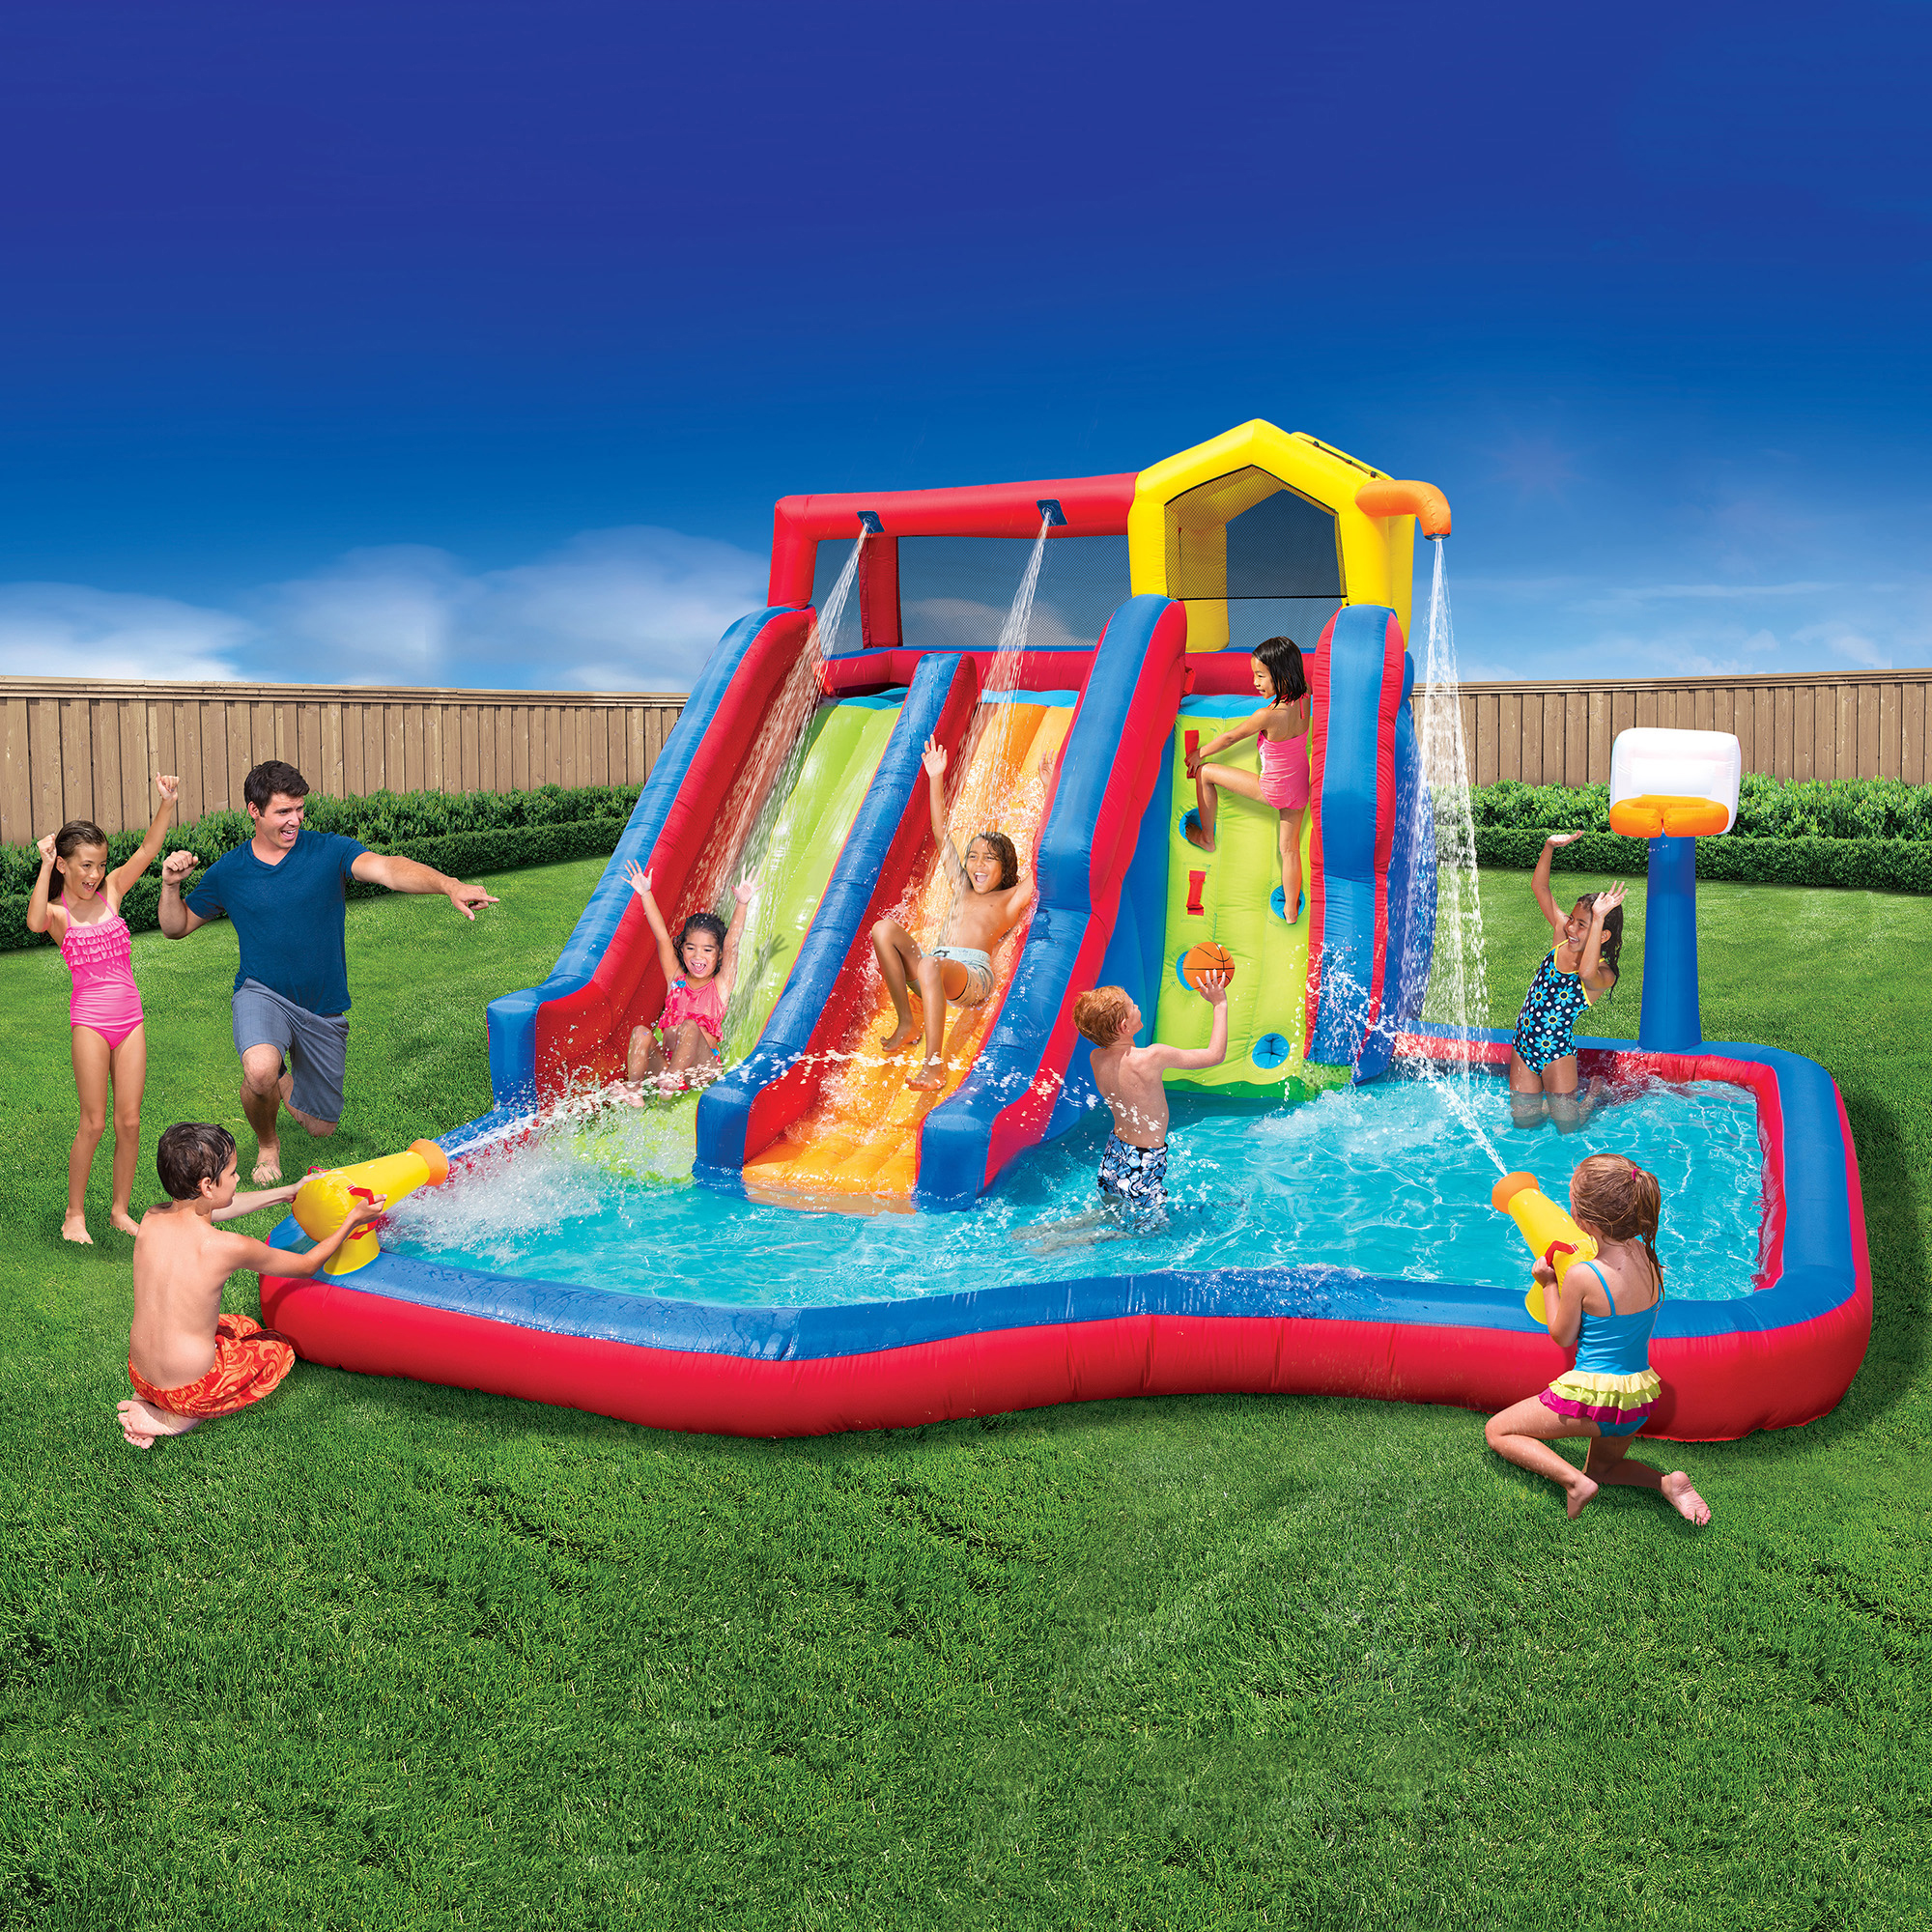 Banzai Twin Falls Kids Giant Outdoor Inflatable Water Slide Splash Park - image 2 of 12